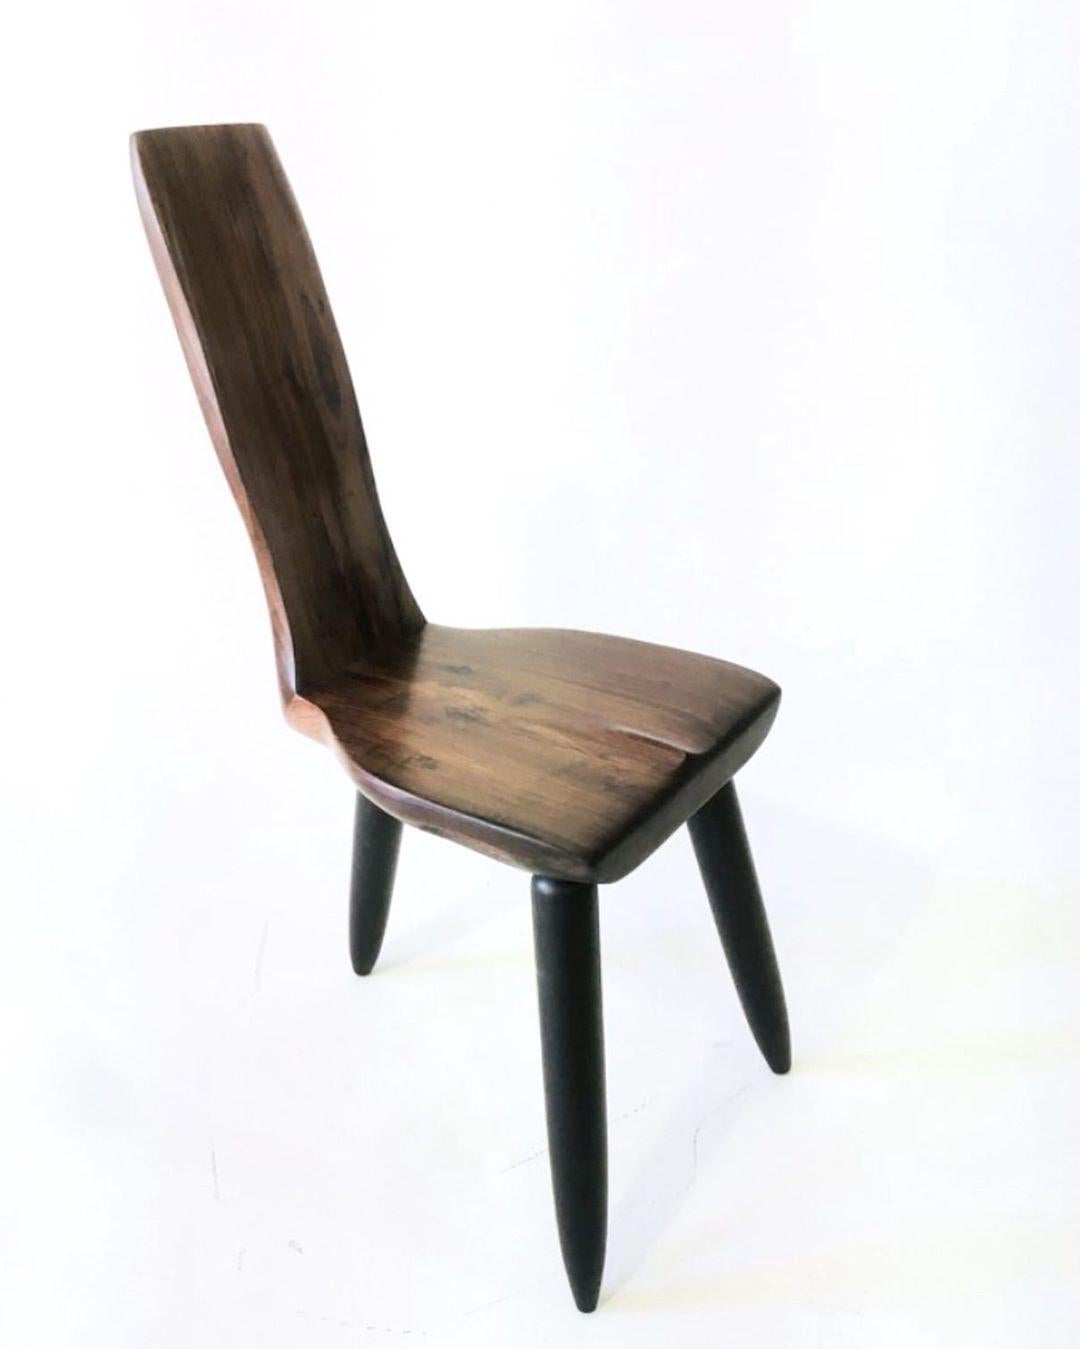 Organic Modern Unique Sculptural Chair, Zara by Gustavo Dias